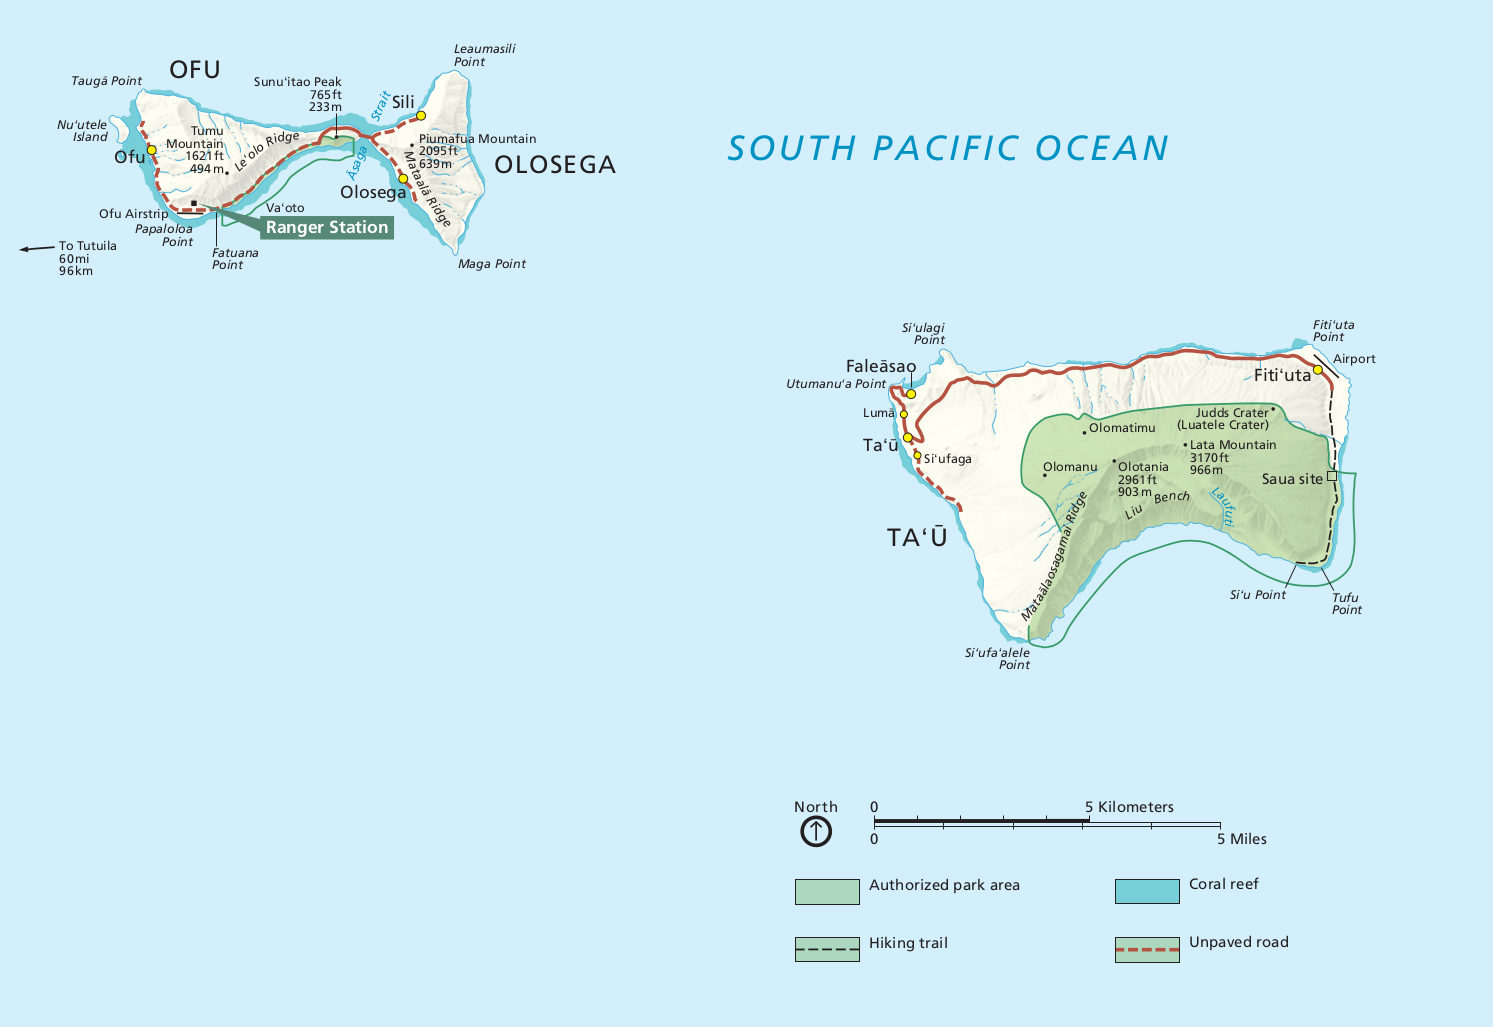 File:NPS american-samoa-manua-islands-map.jpg - Wikimedia Commons